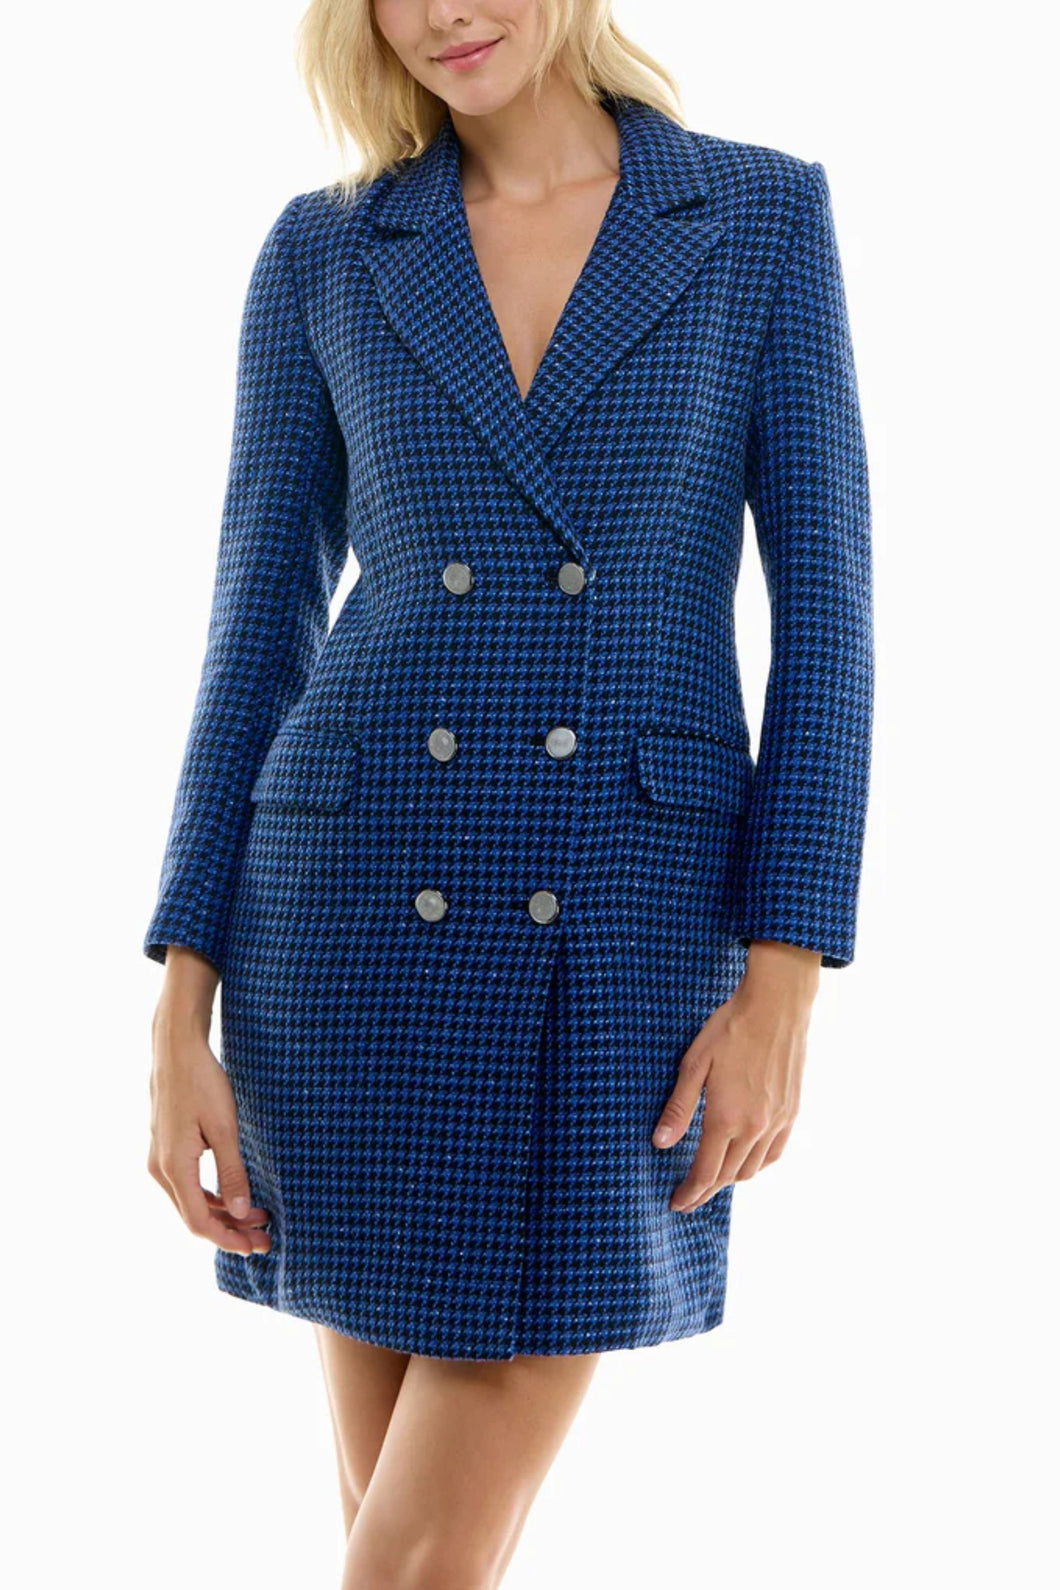 Nicole Miller Houndstooth Blazer, Sizes 12 & 14 Remaining Women's Jackets, Office Attire